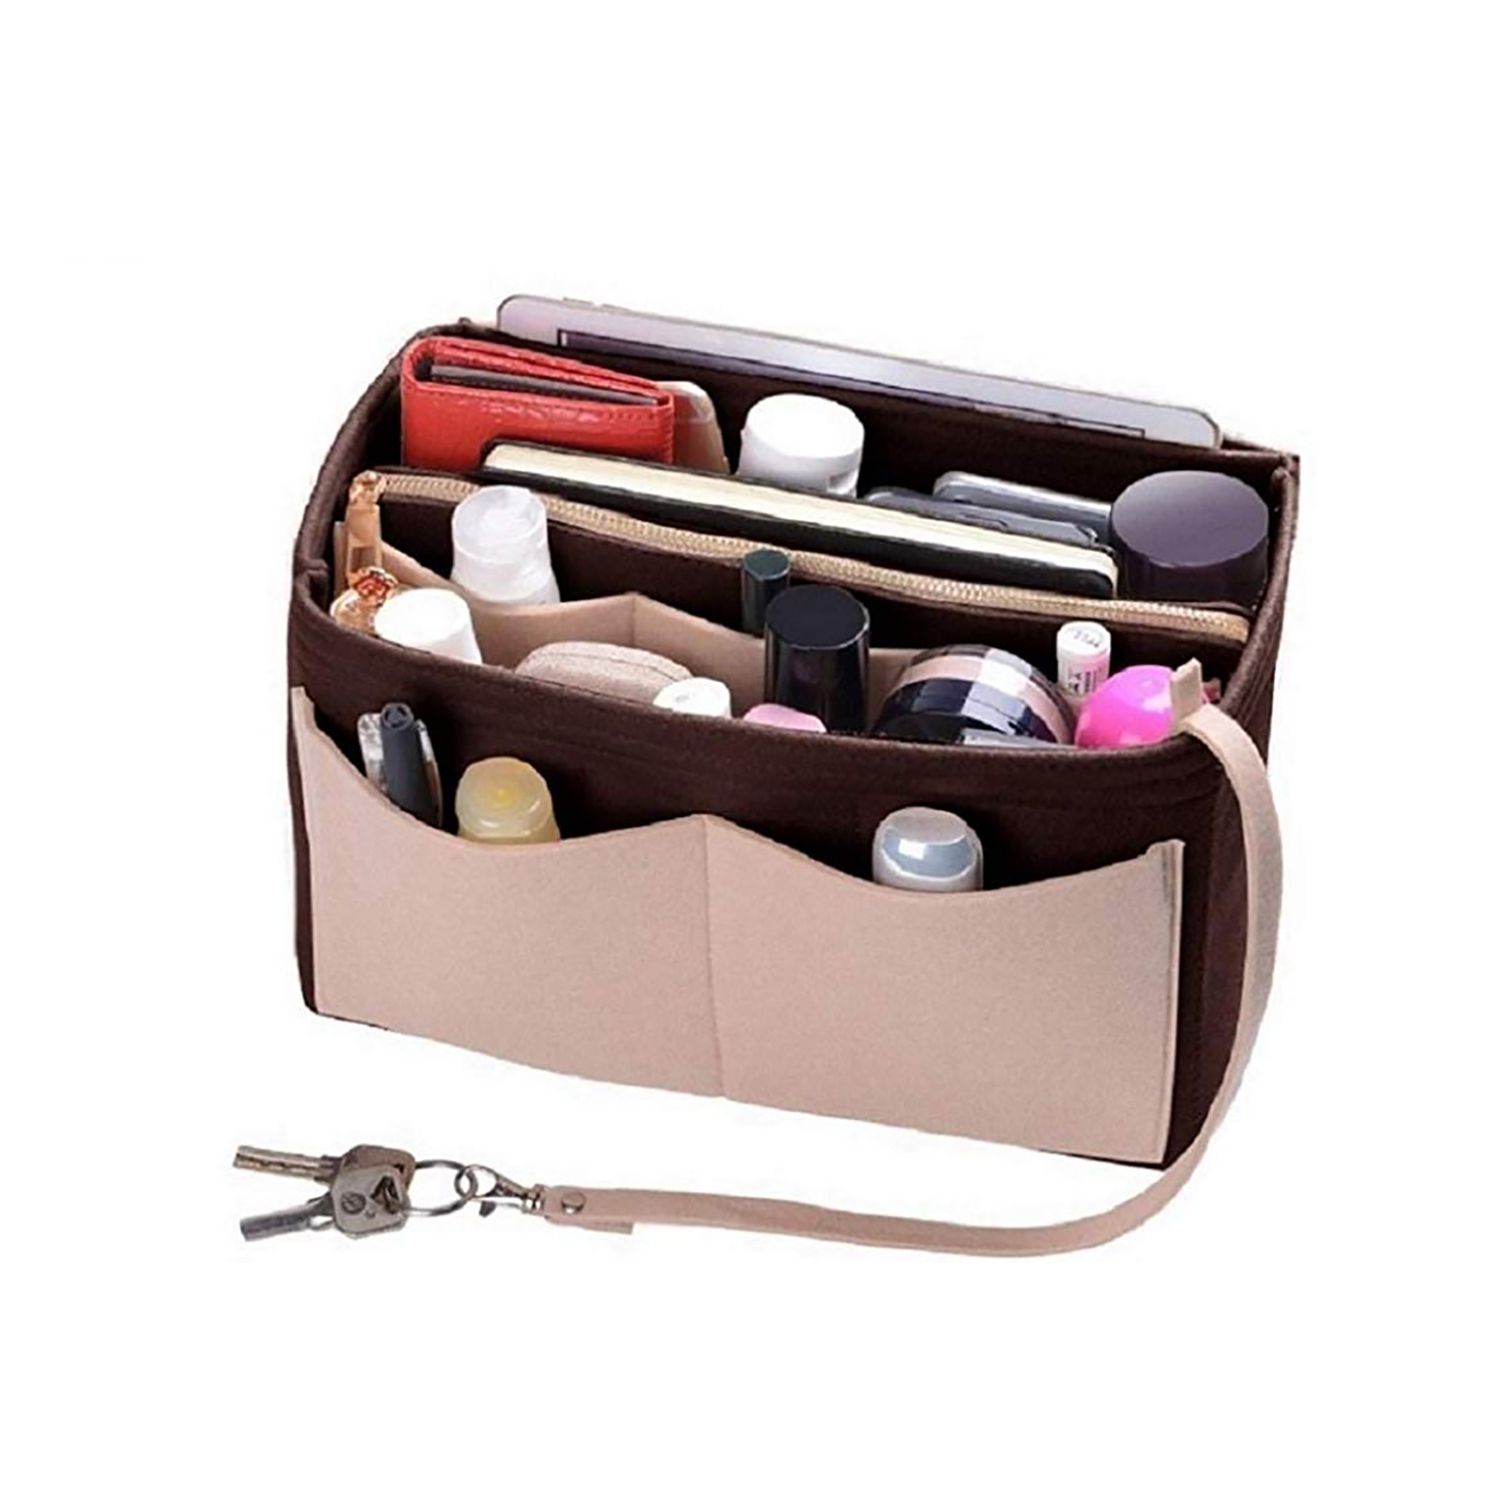 Bag in Bag 2020 Felt Purse Organizer Insert Bag Handbag Tote Makeup Organizer